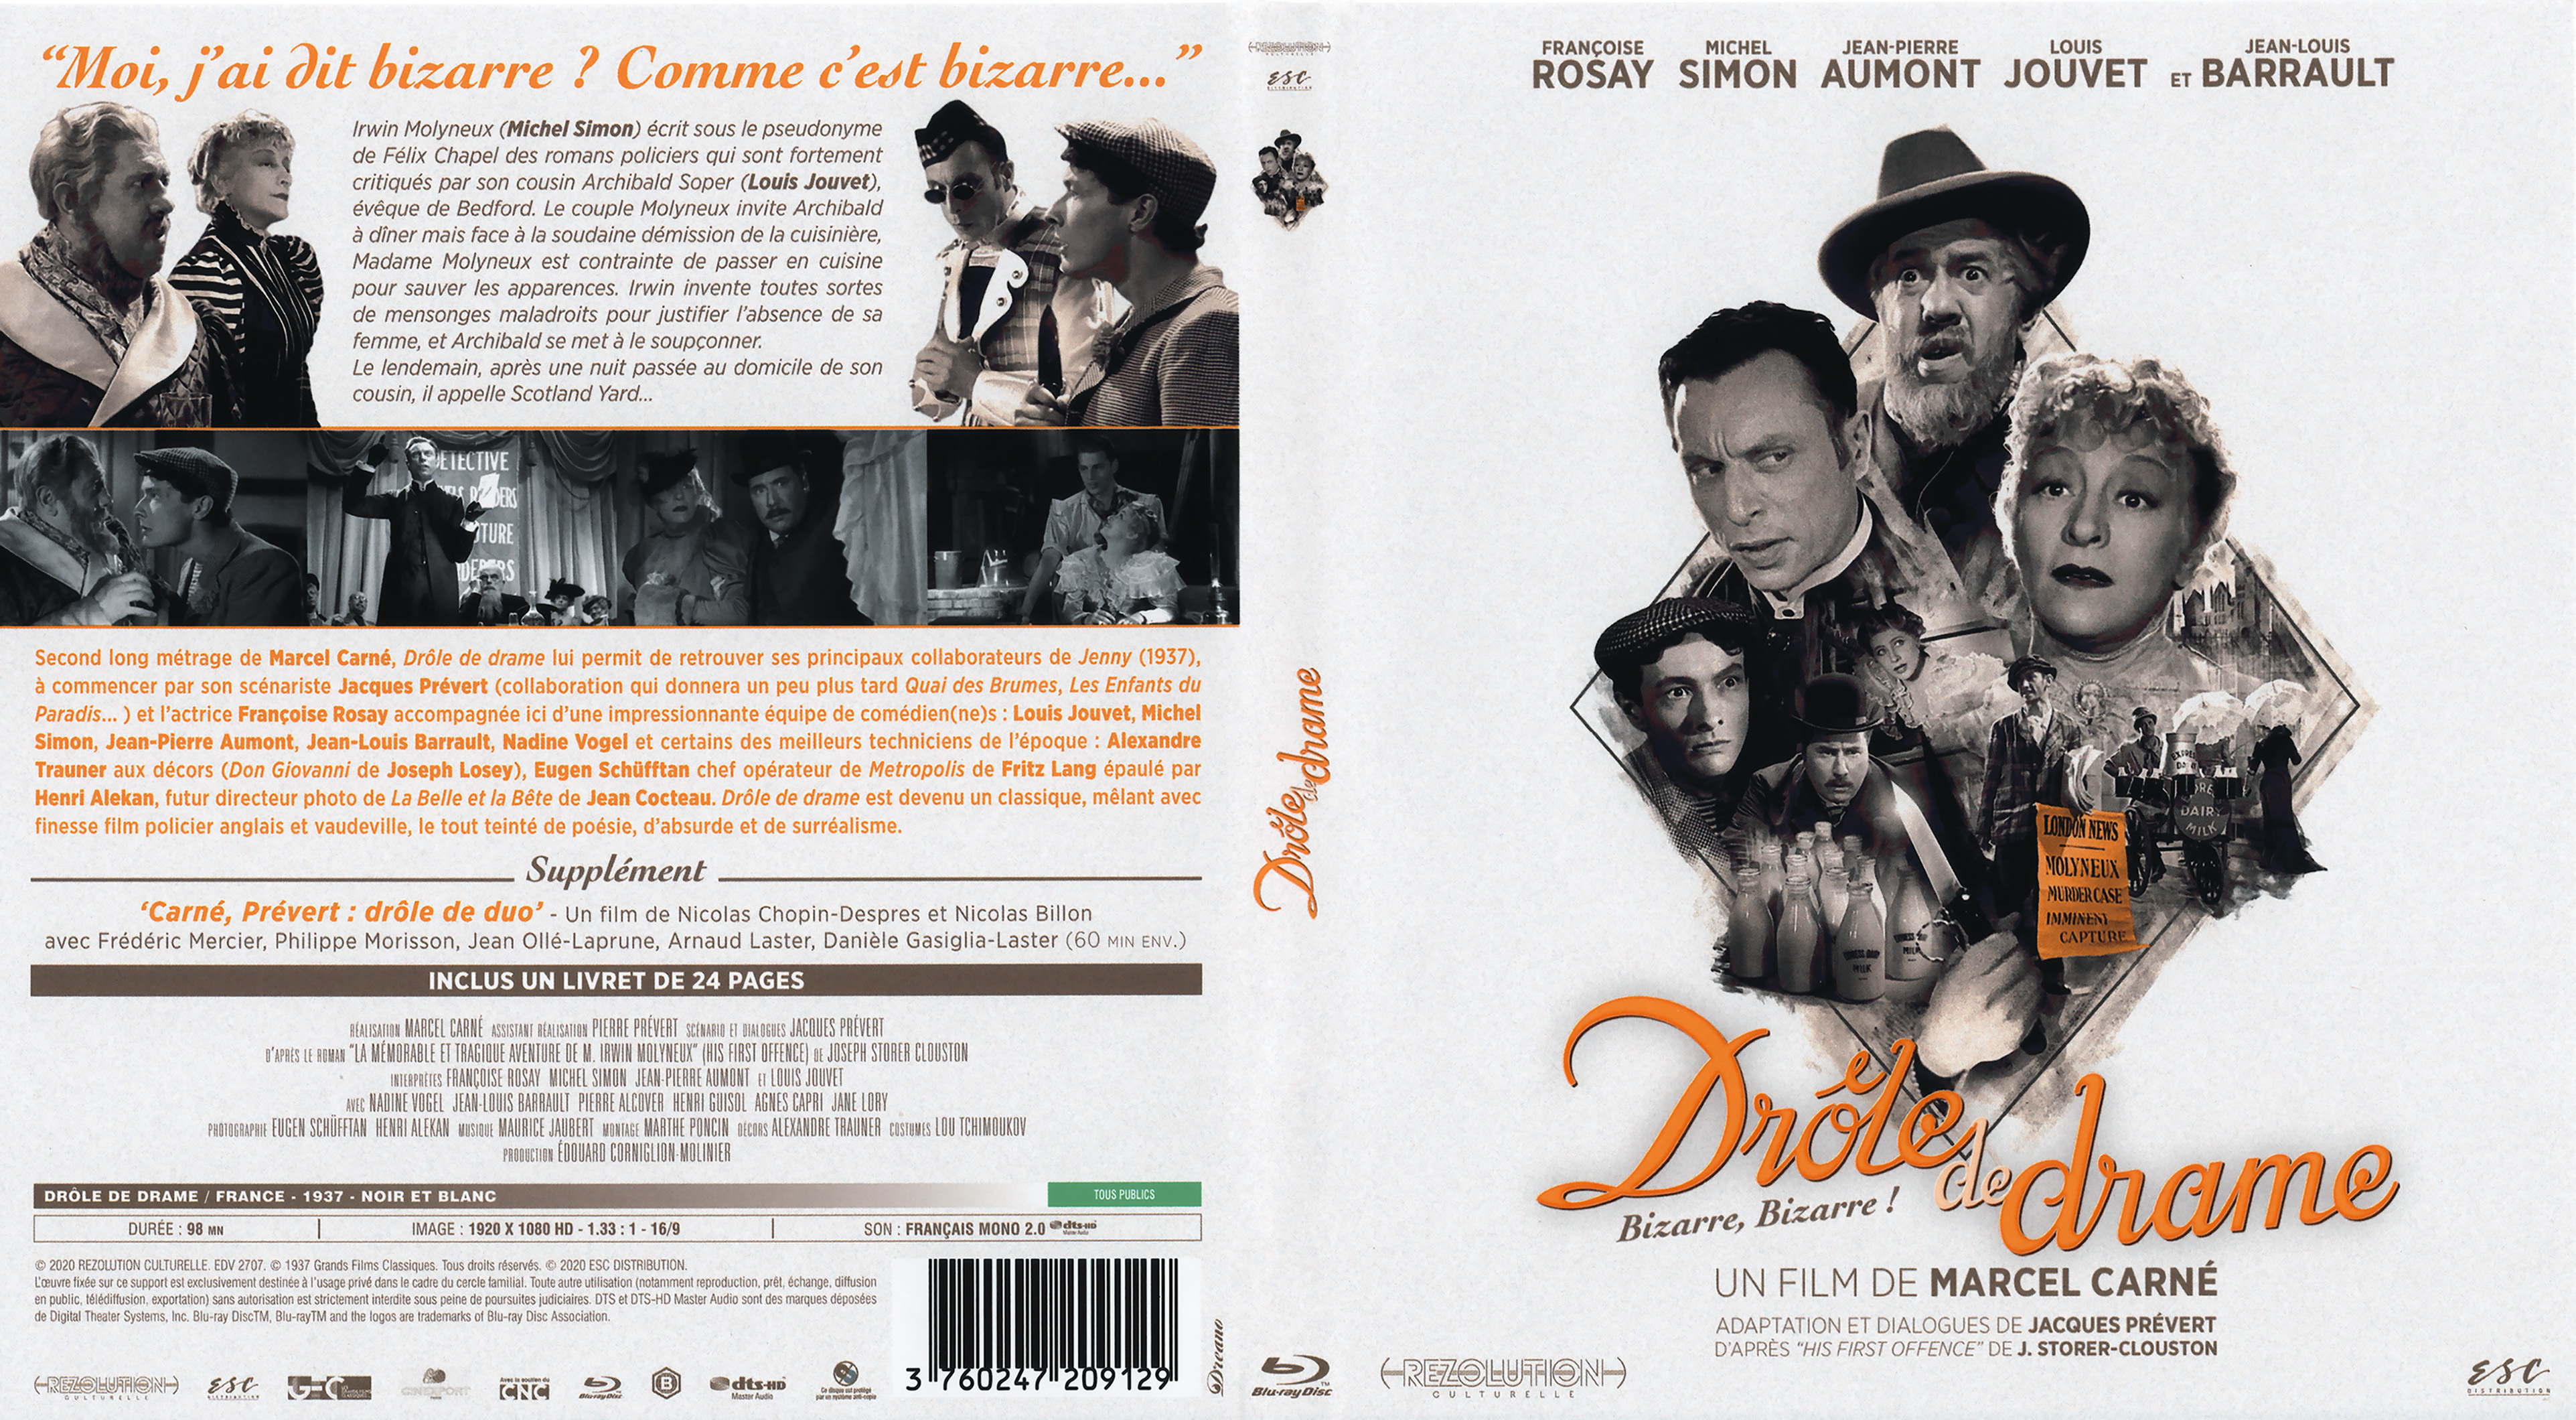 Jaquette DVD Drole de drame (BLU-RAY) v2